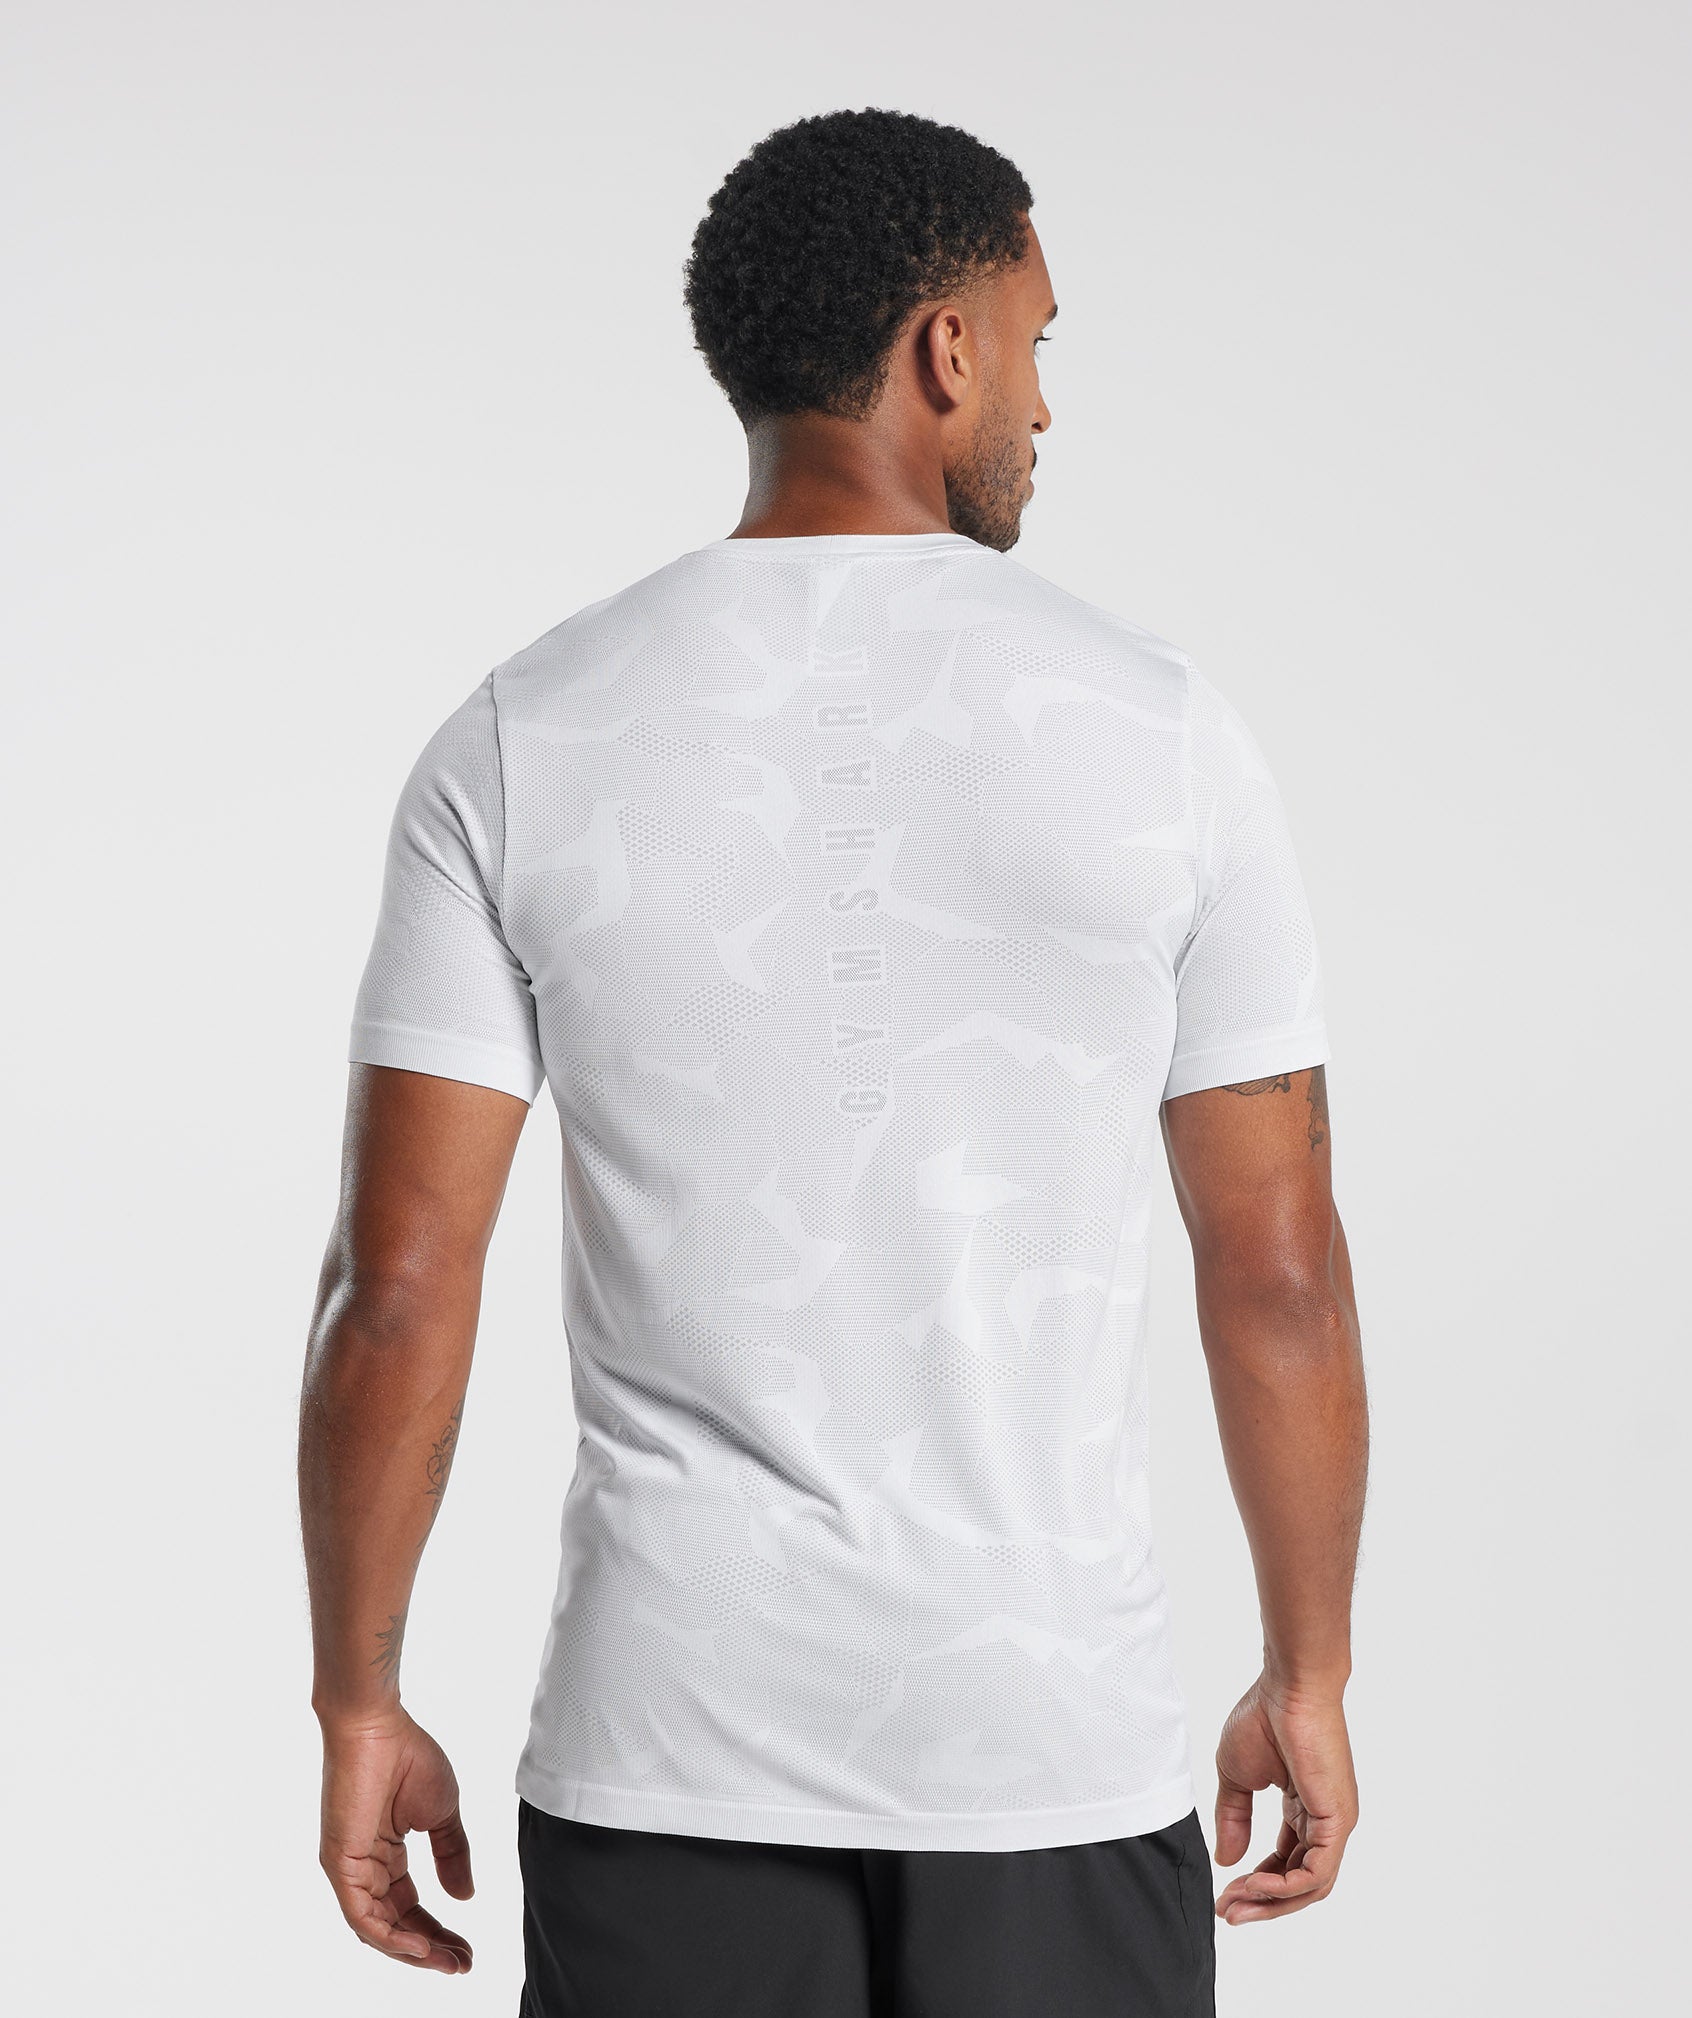 Sport Seamless T-Shirt in White/Smokey Grey - view 2